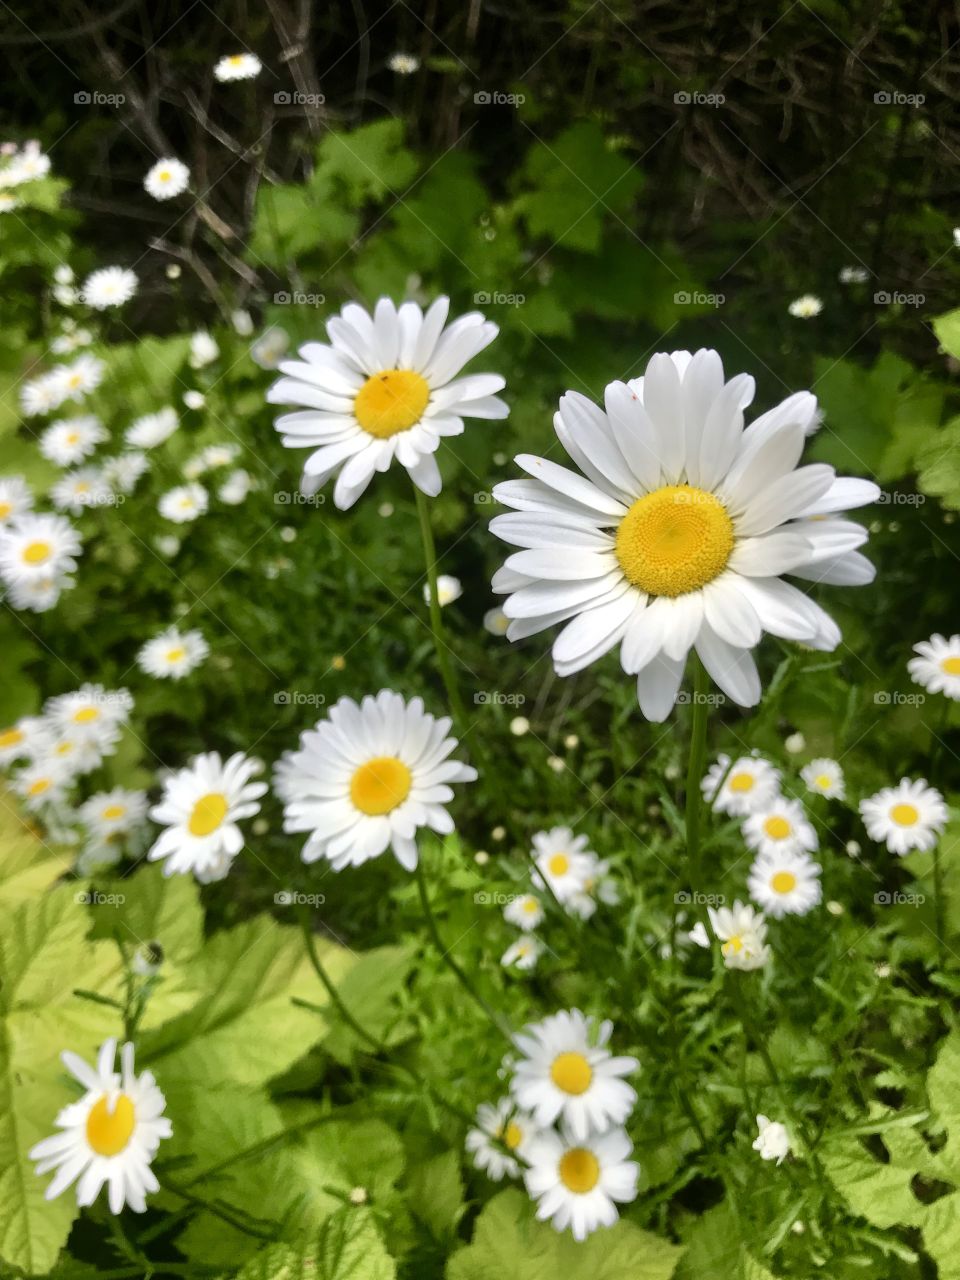 Wild daisies along a hiking trail brighten the path.